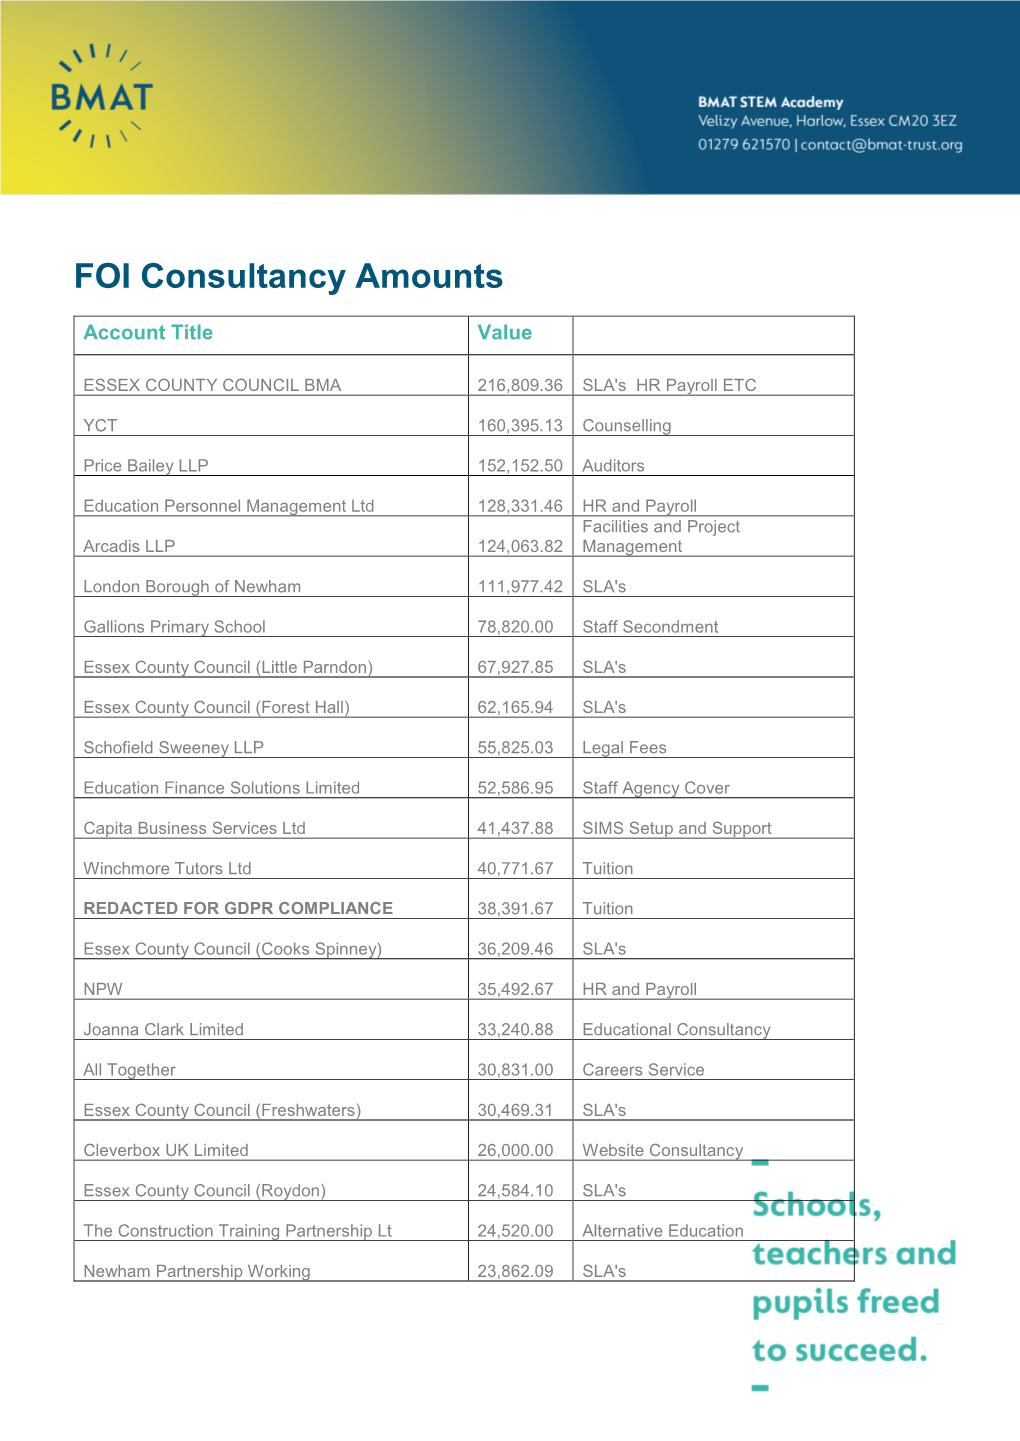 FOI Consultancy Amounts